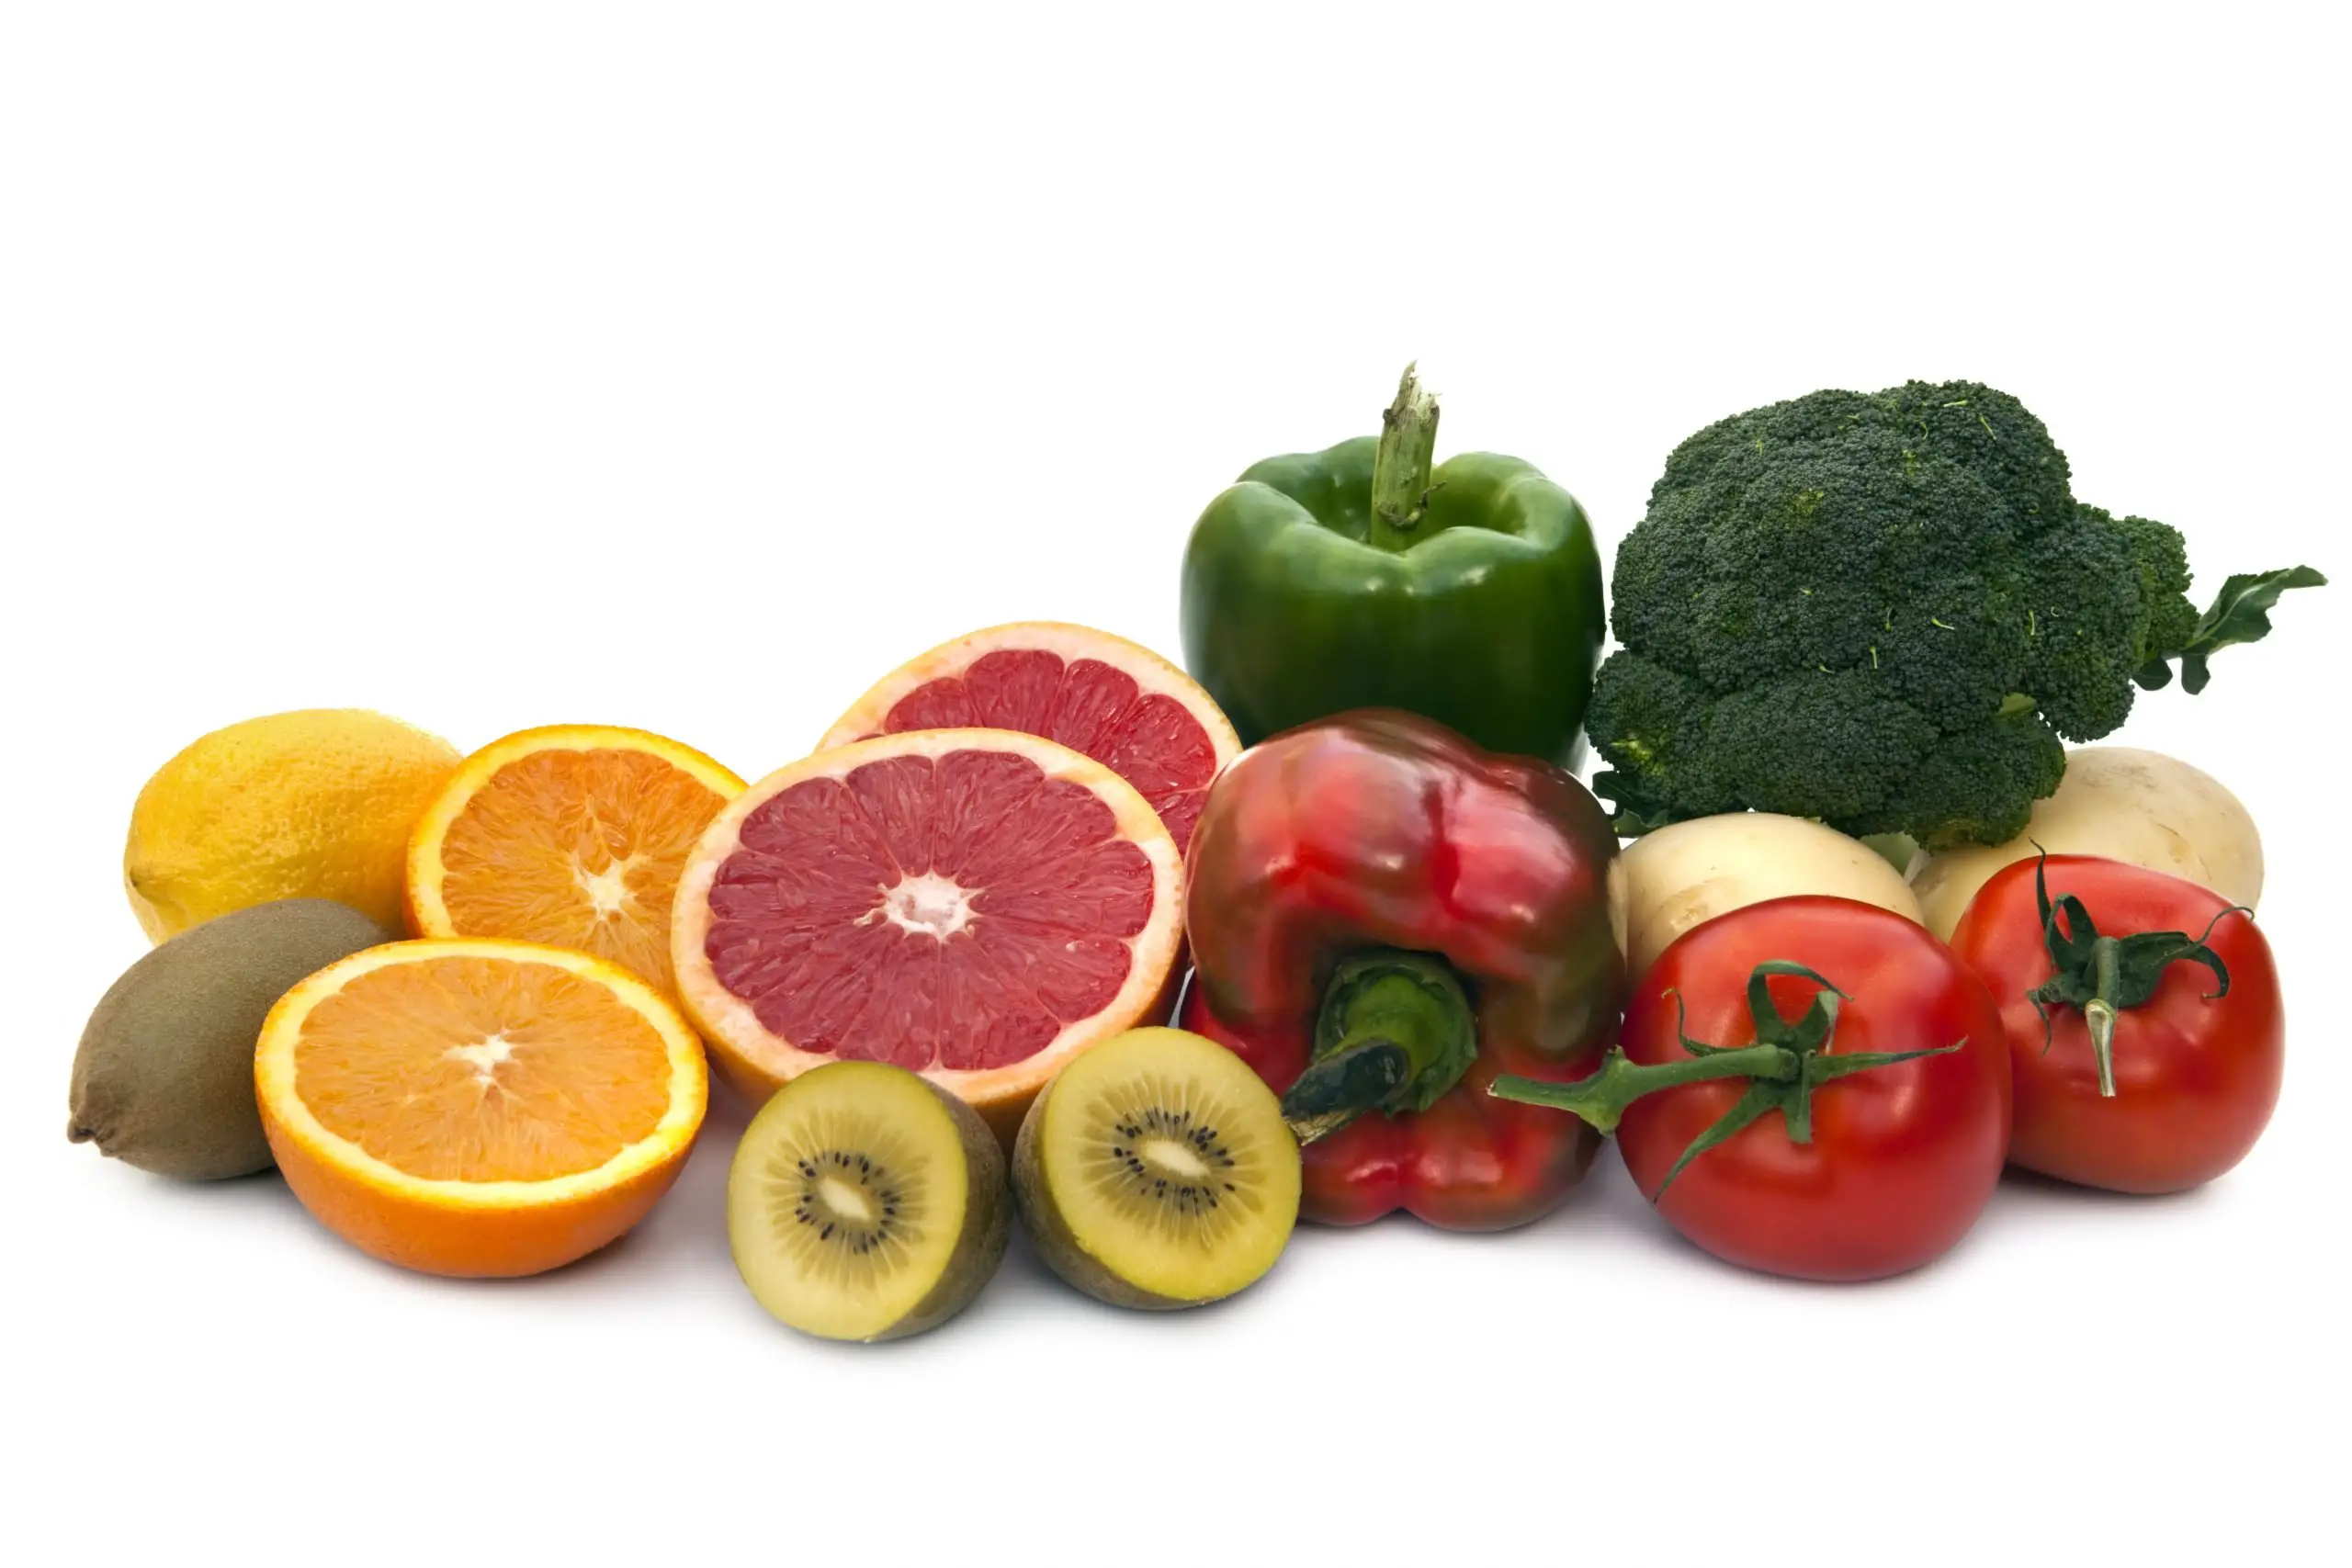 Top 10 Vitamin C Foods